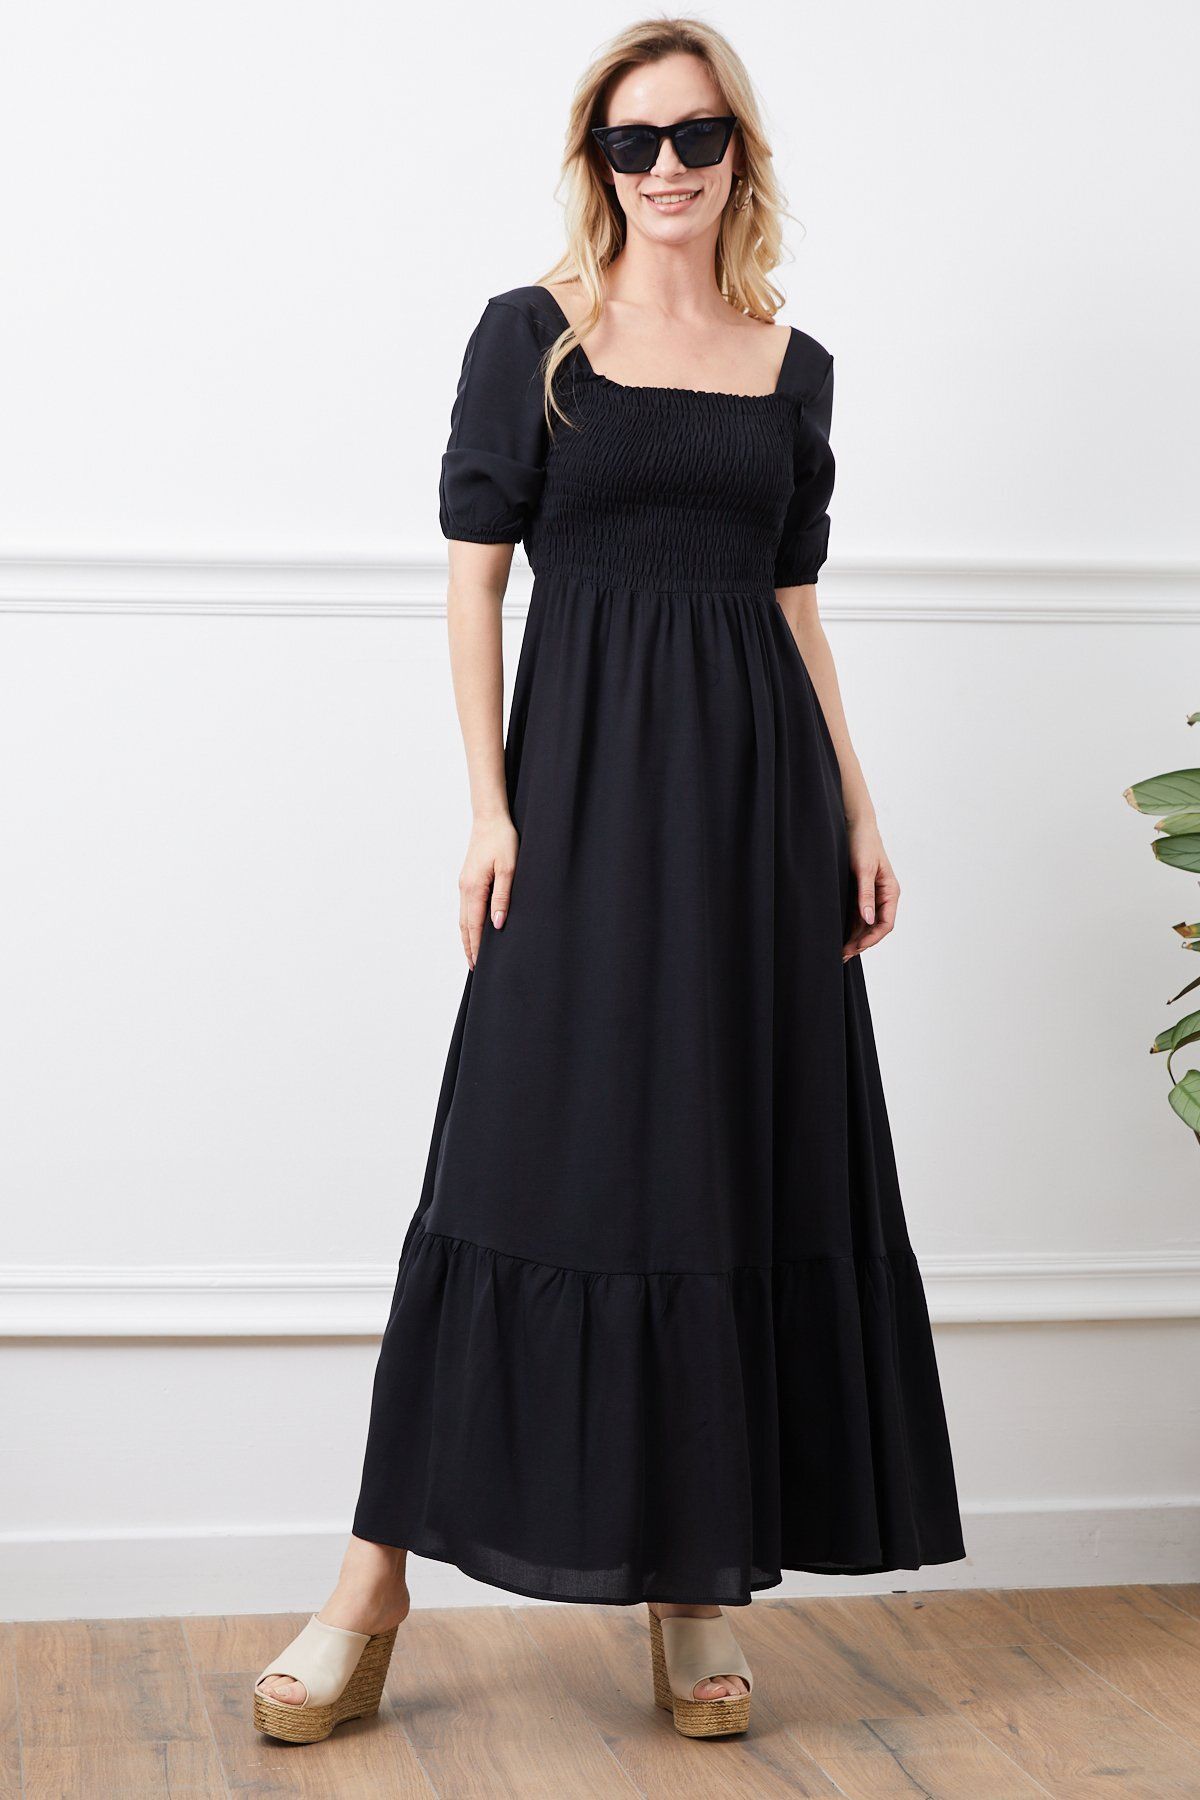 KaSheHa Siyah Kare Yaka Beli Gipeli Eteği Pileli Full Esnek Bodrum Elbise 115 Cm